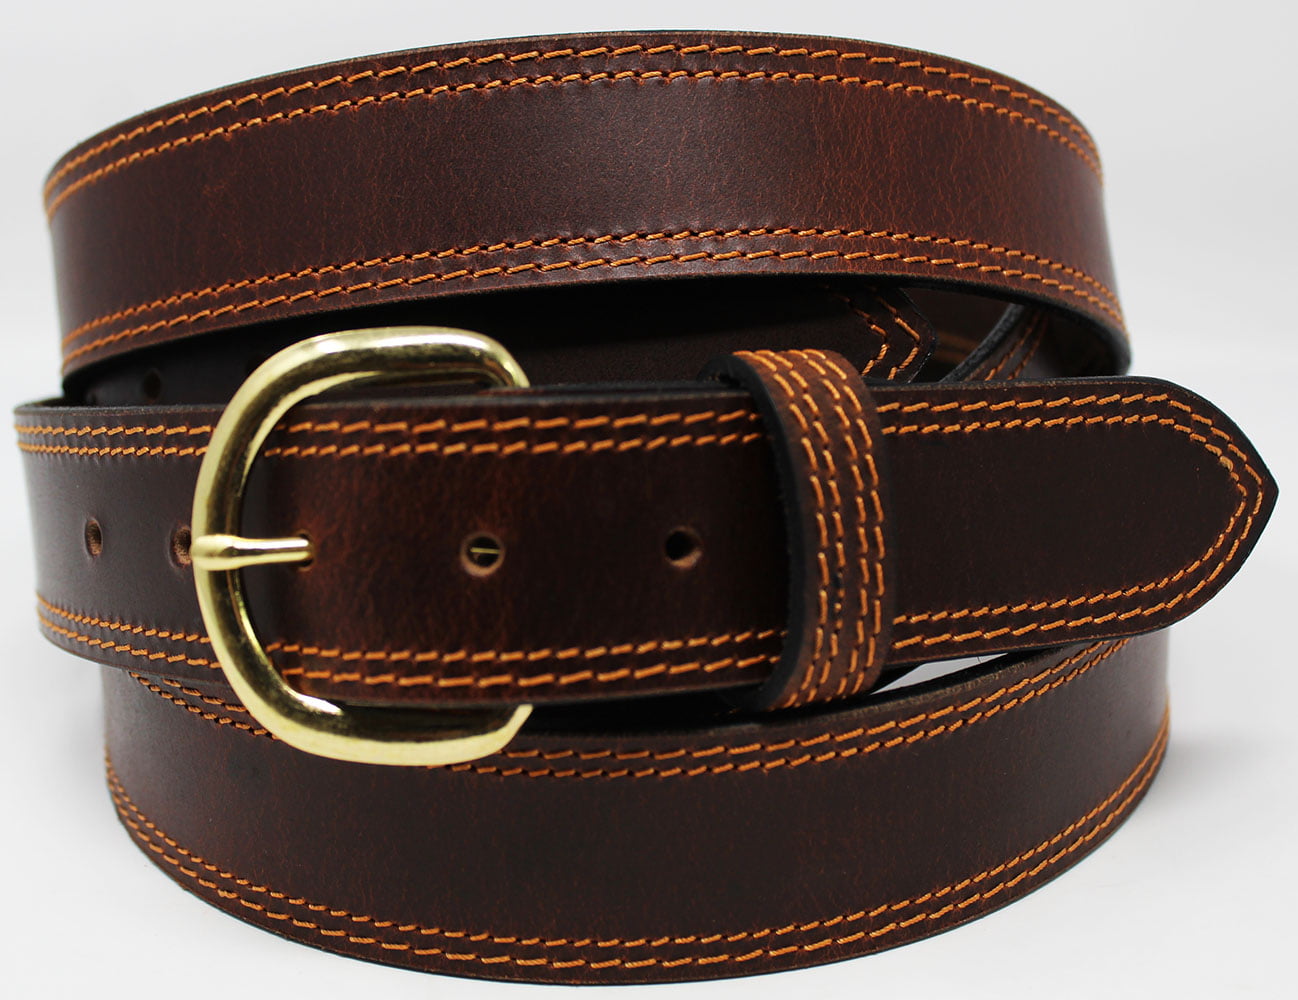 2 Inch Roller Buckle Belt Pure leather heavy duty rust resistant work belt